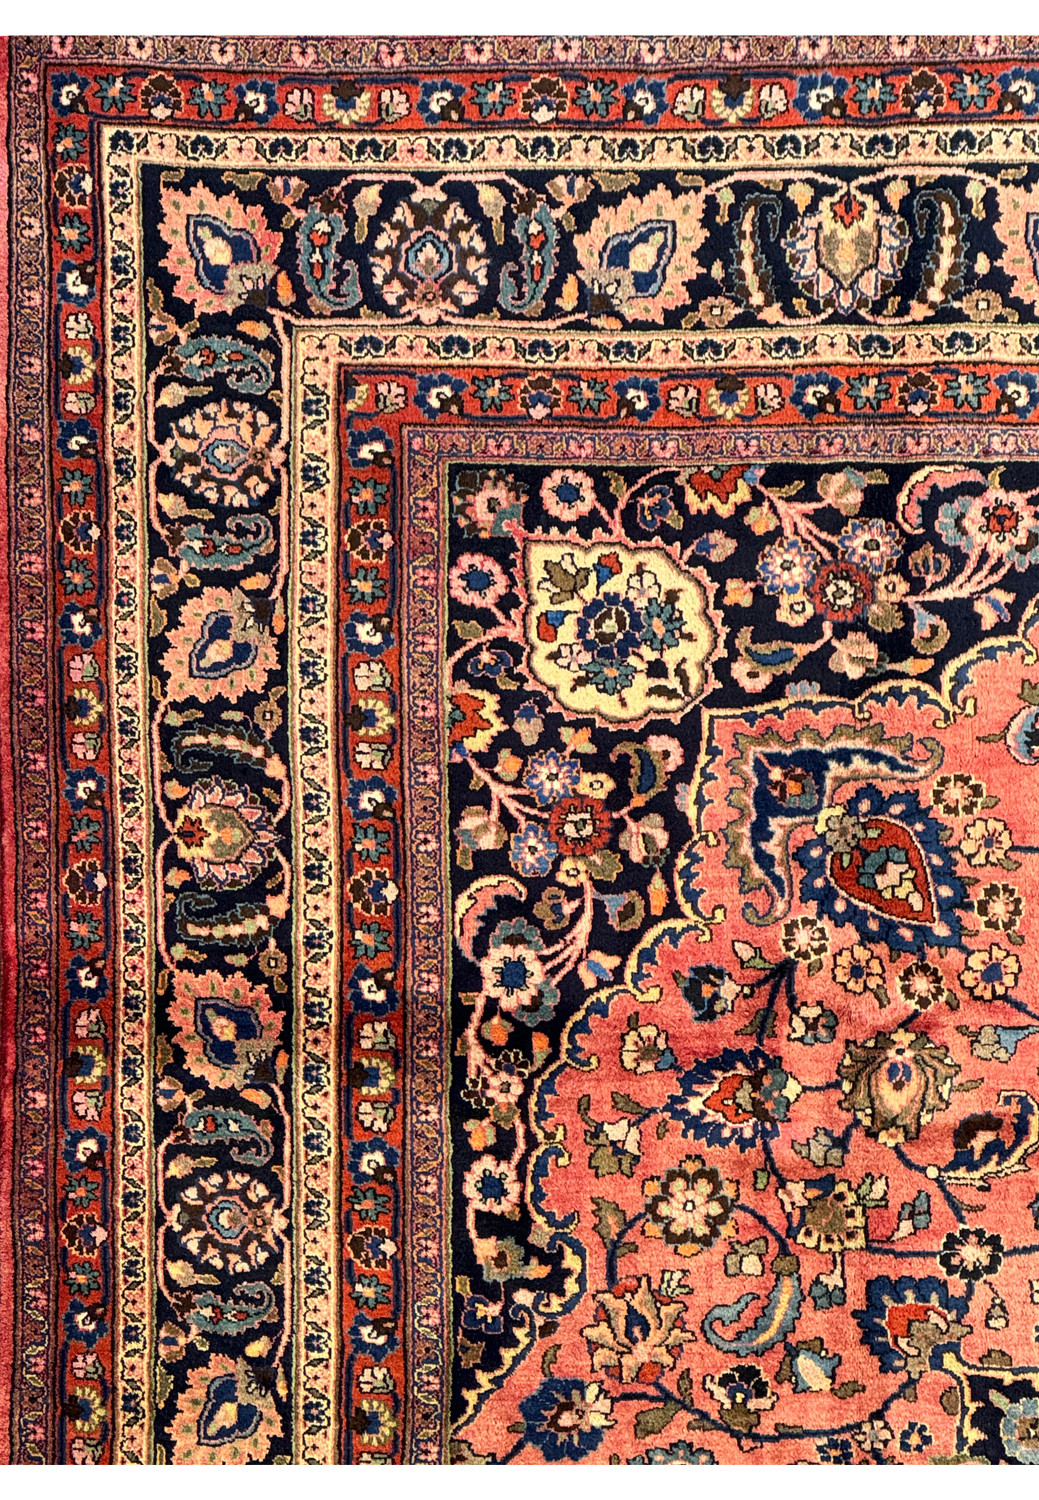 Corner section of the Persian Mashad rug illustrating the border design and fringe detail